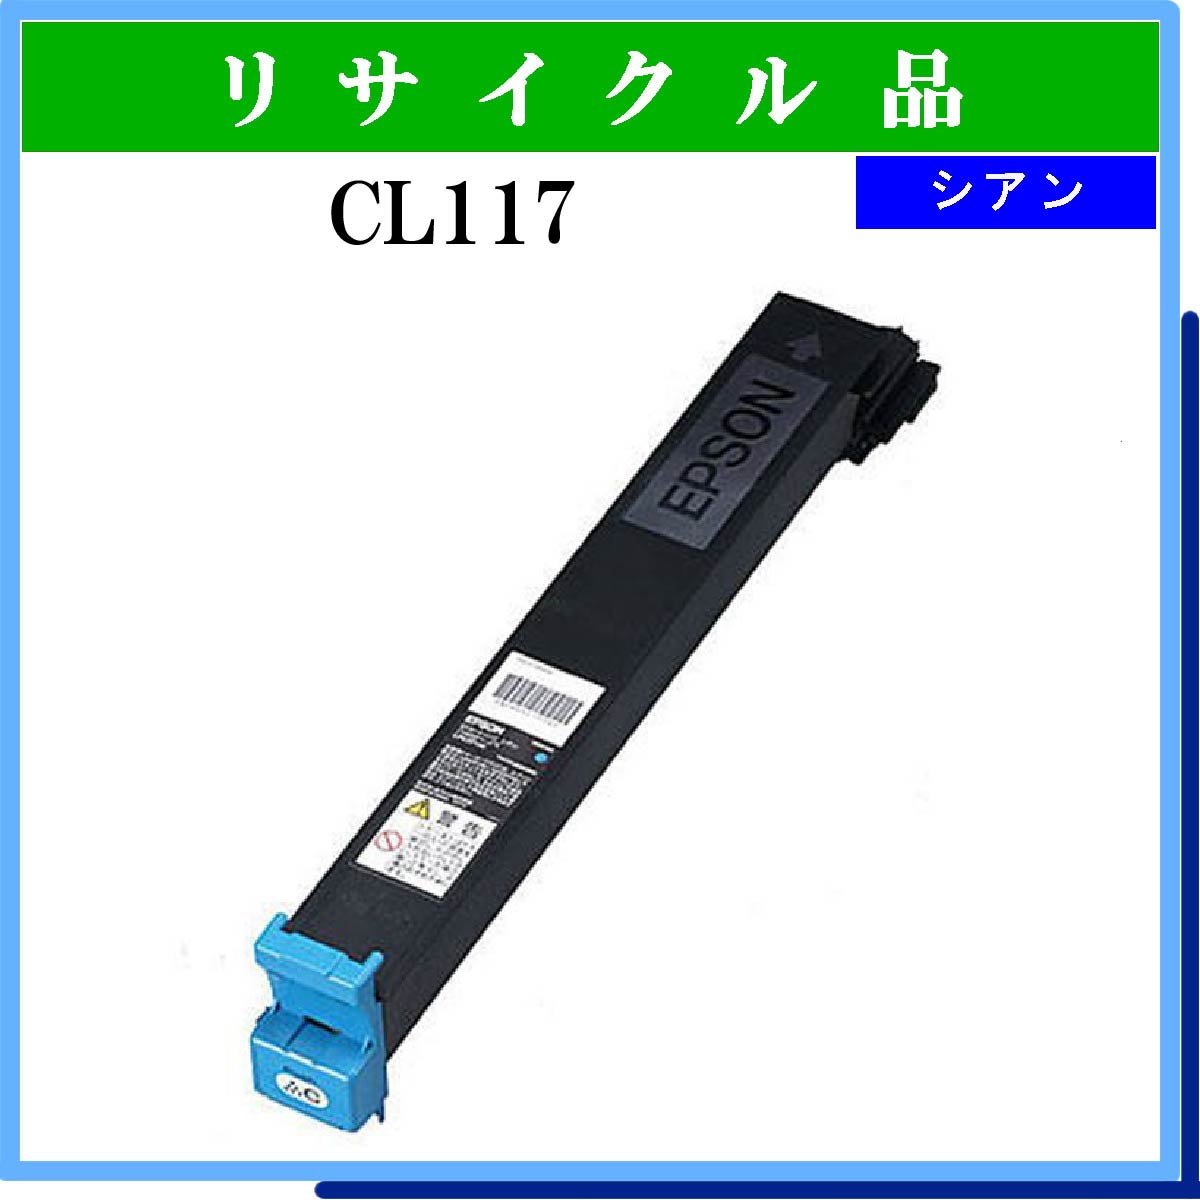 CL117 ｼｱﾝ - ウインドウを閉じる